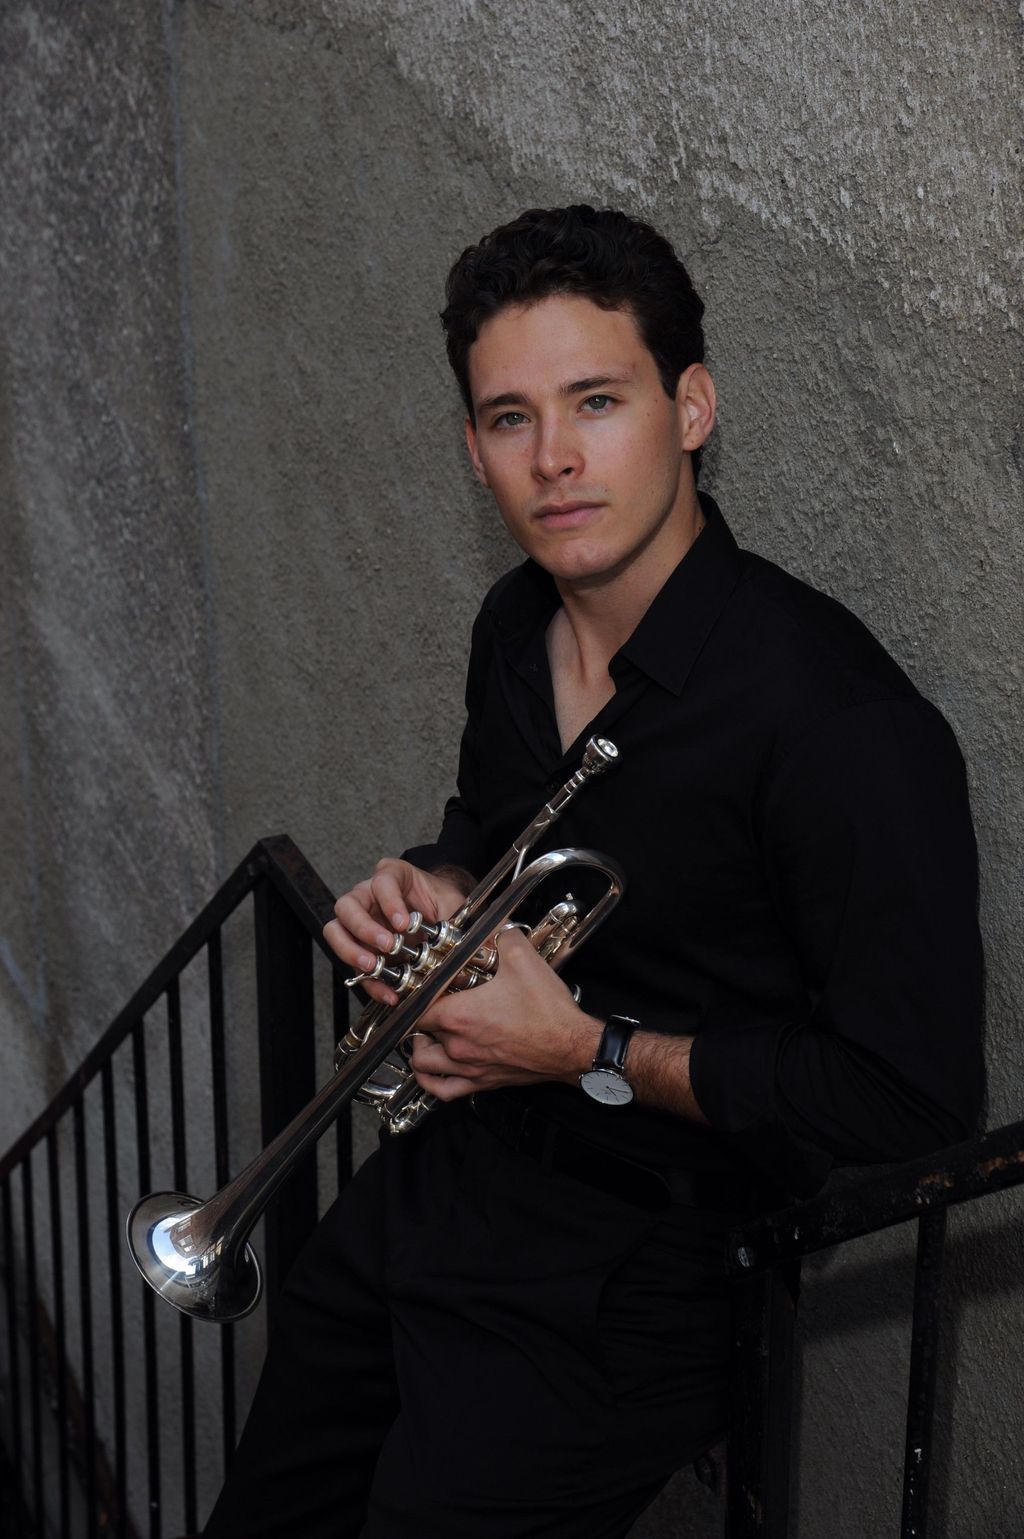 Brian Voelz Trumpet Performer and Educator